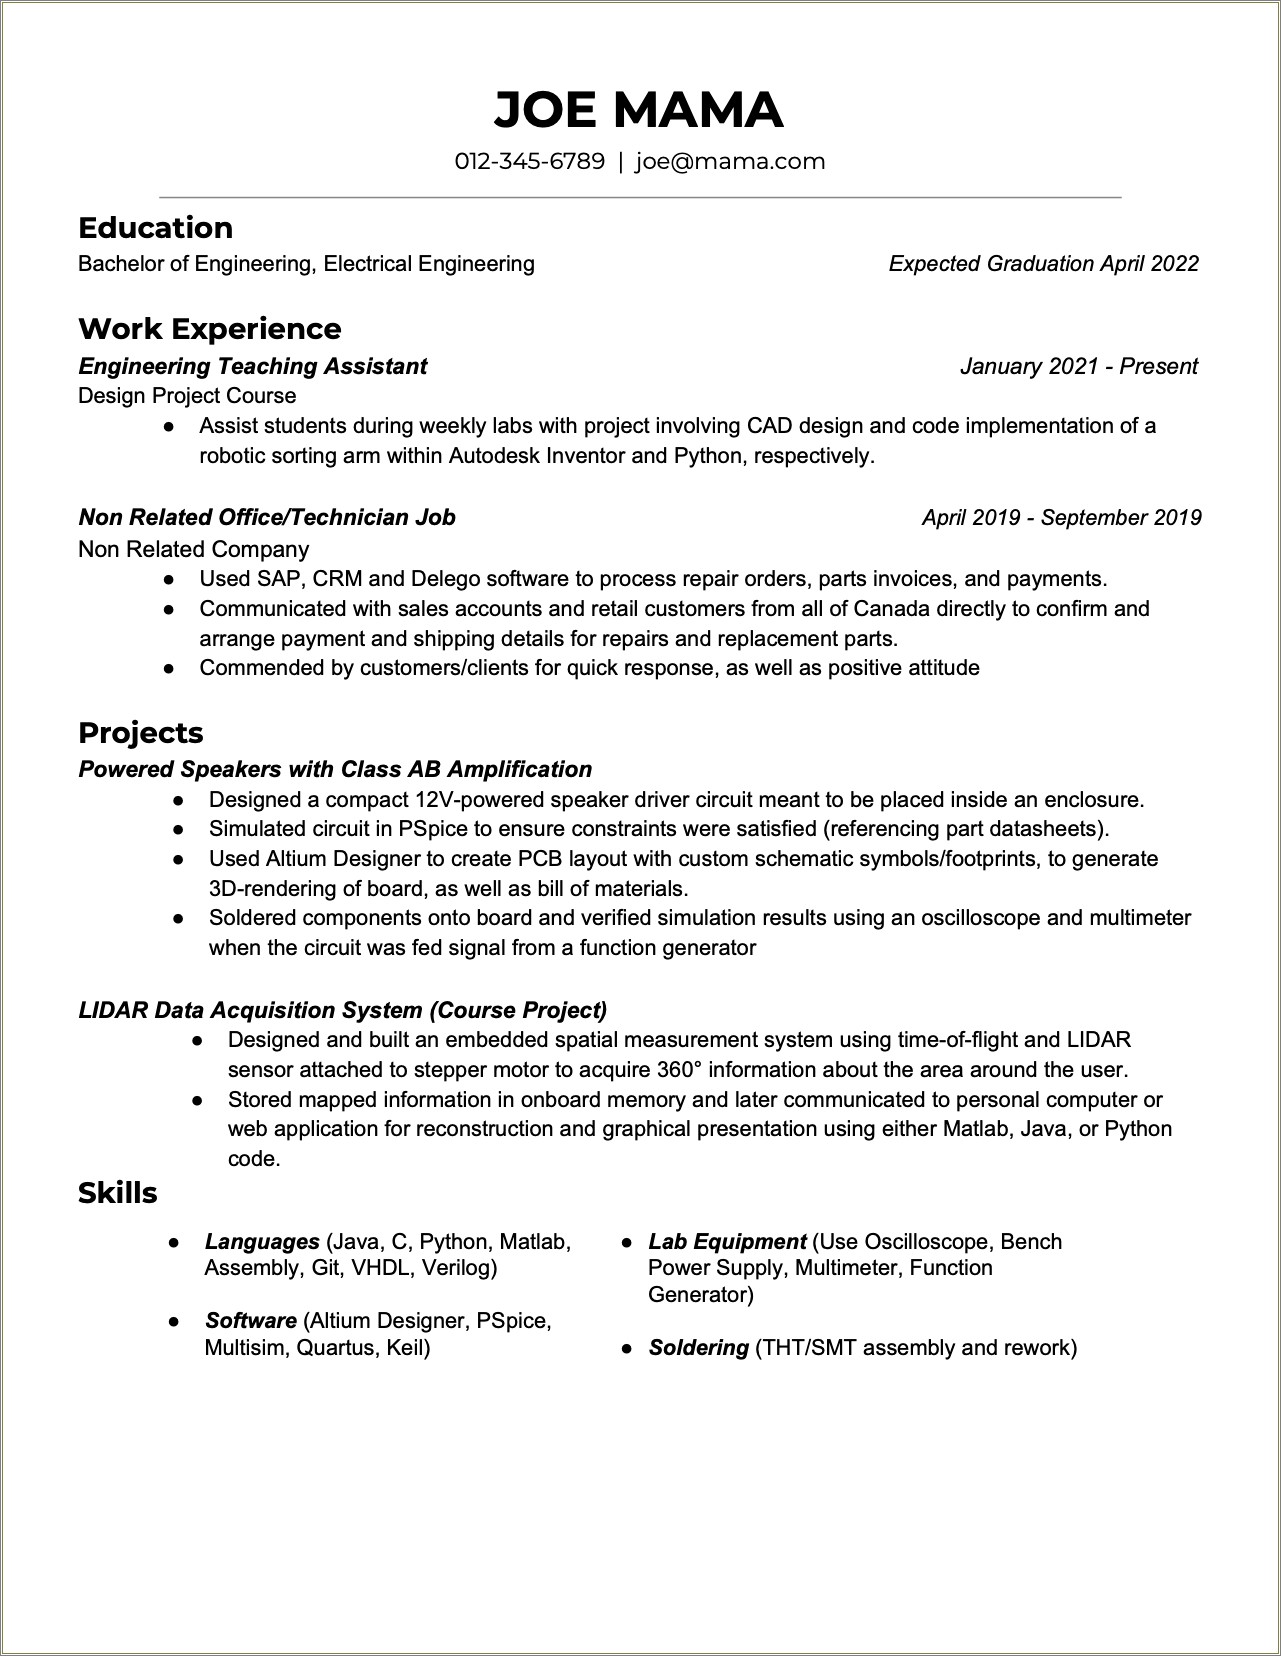 Internship Description On Resume Involving Presenting